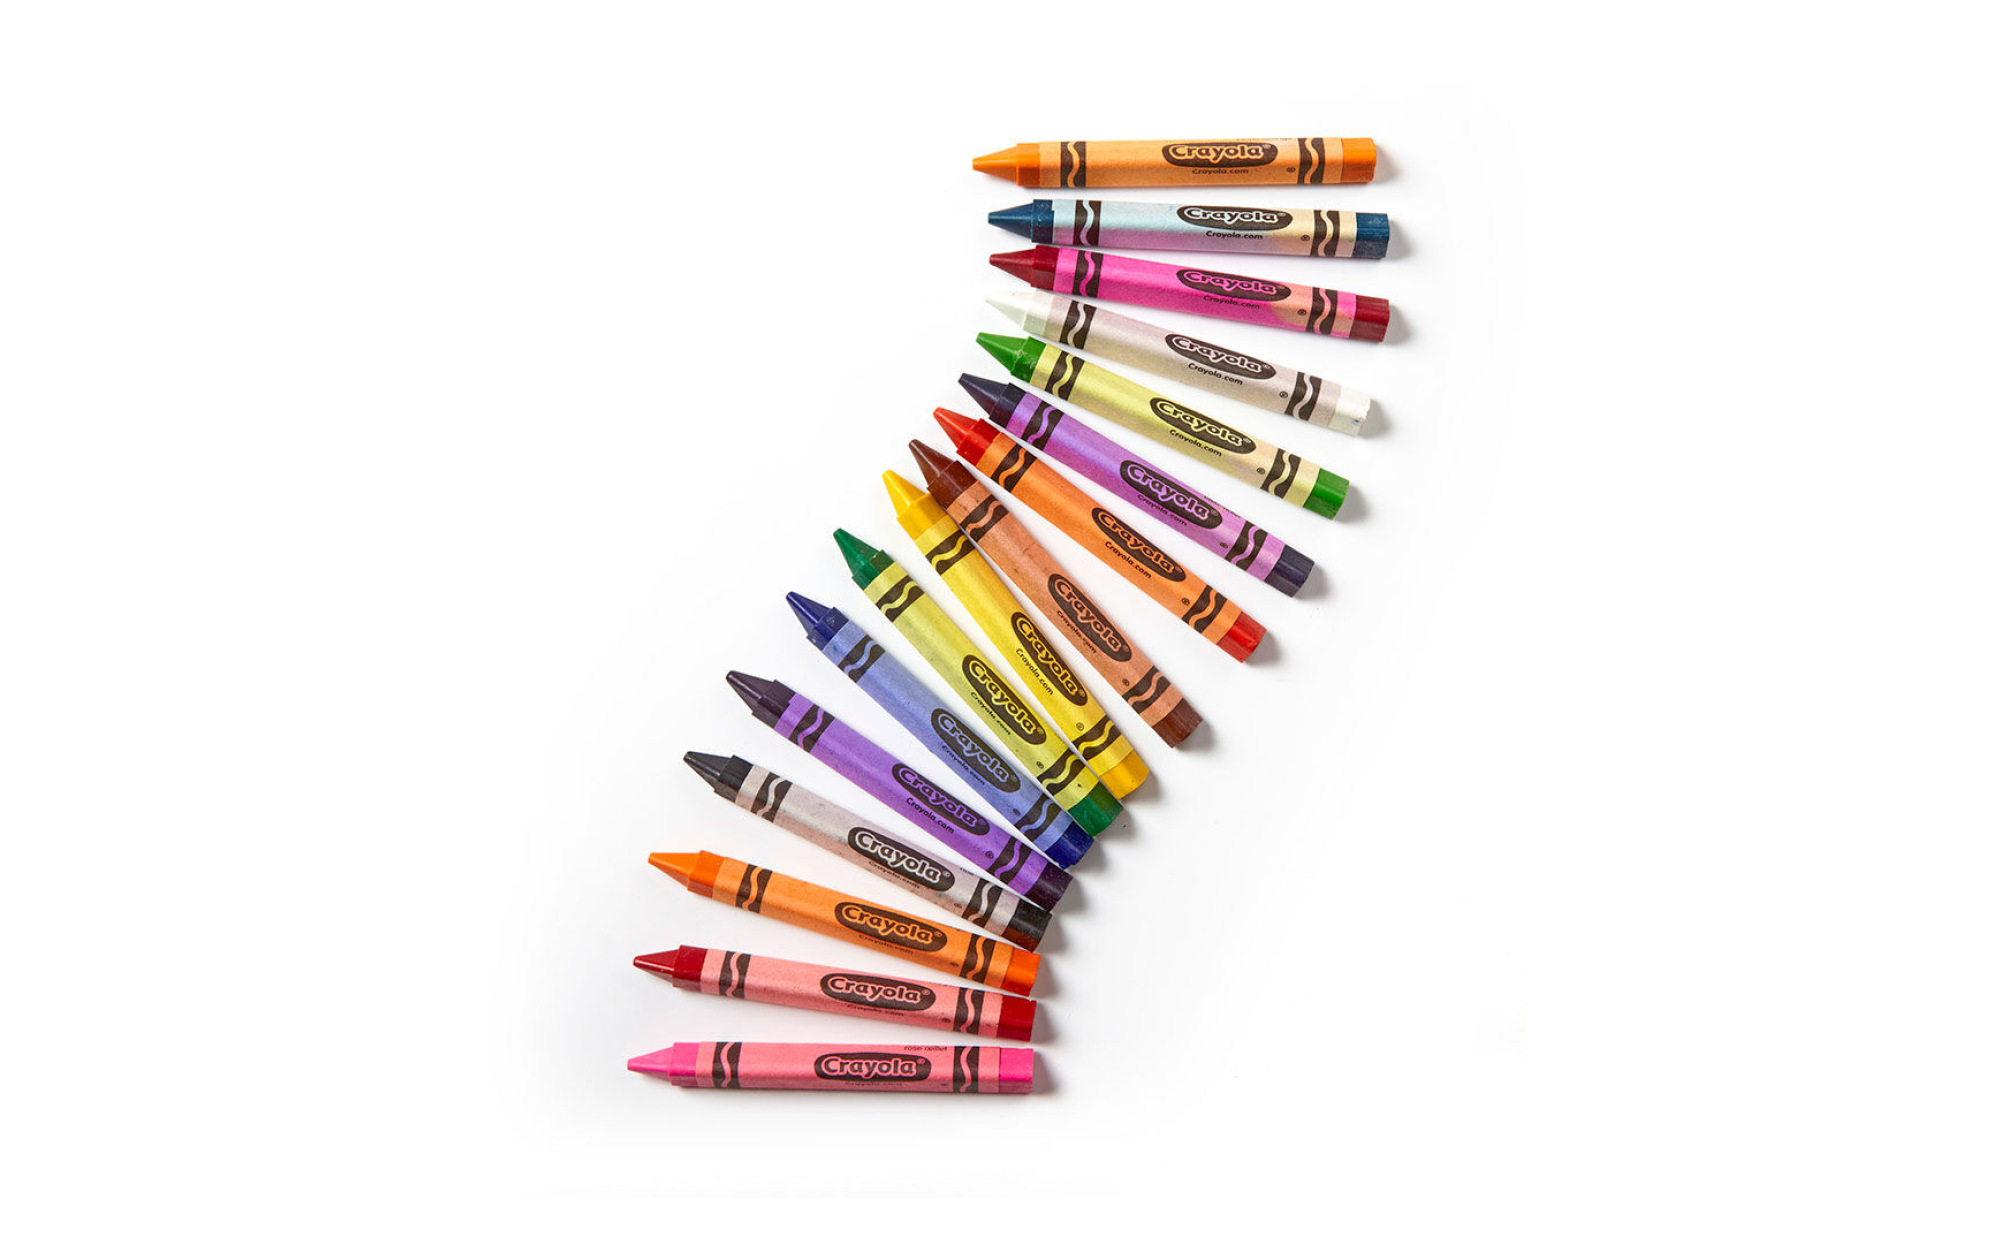 Triangular Crayons Classpack – Art Therapy